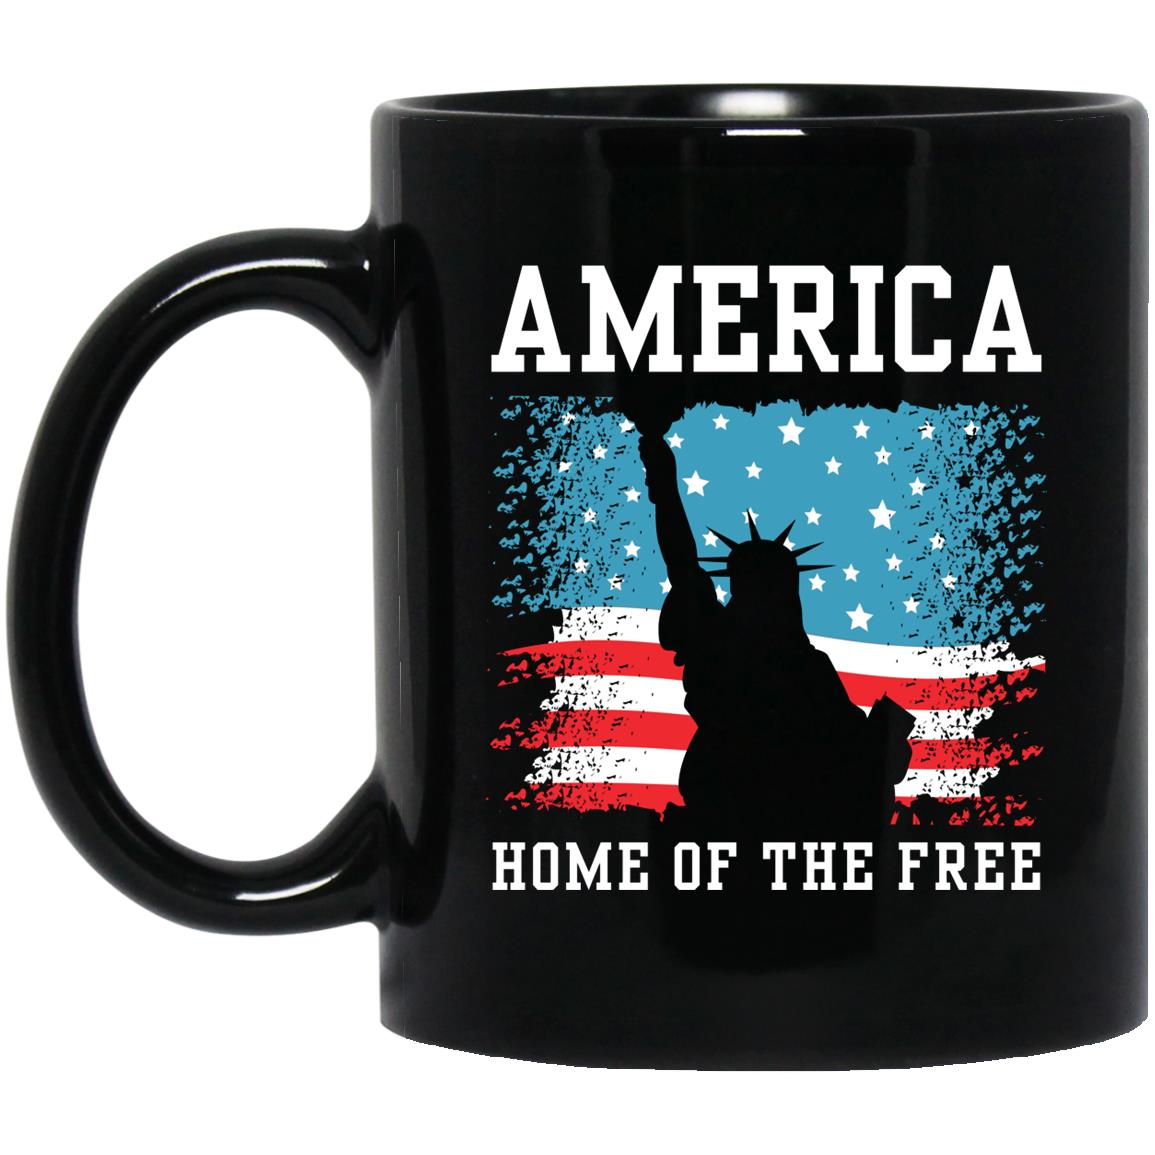 America Home of the Free Liberty Black Mug